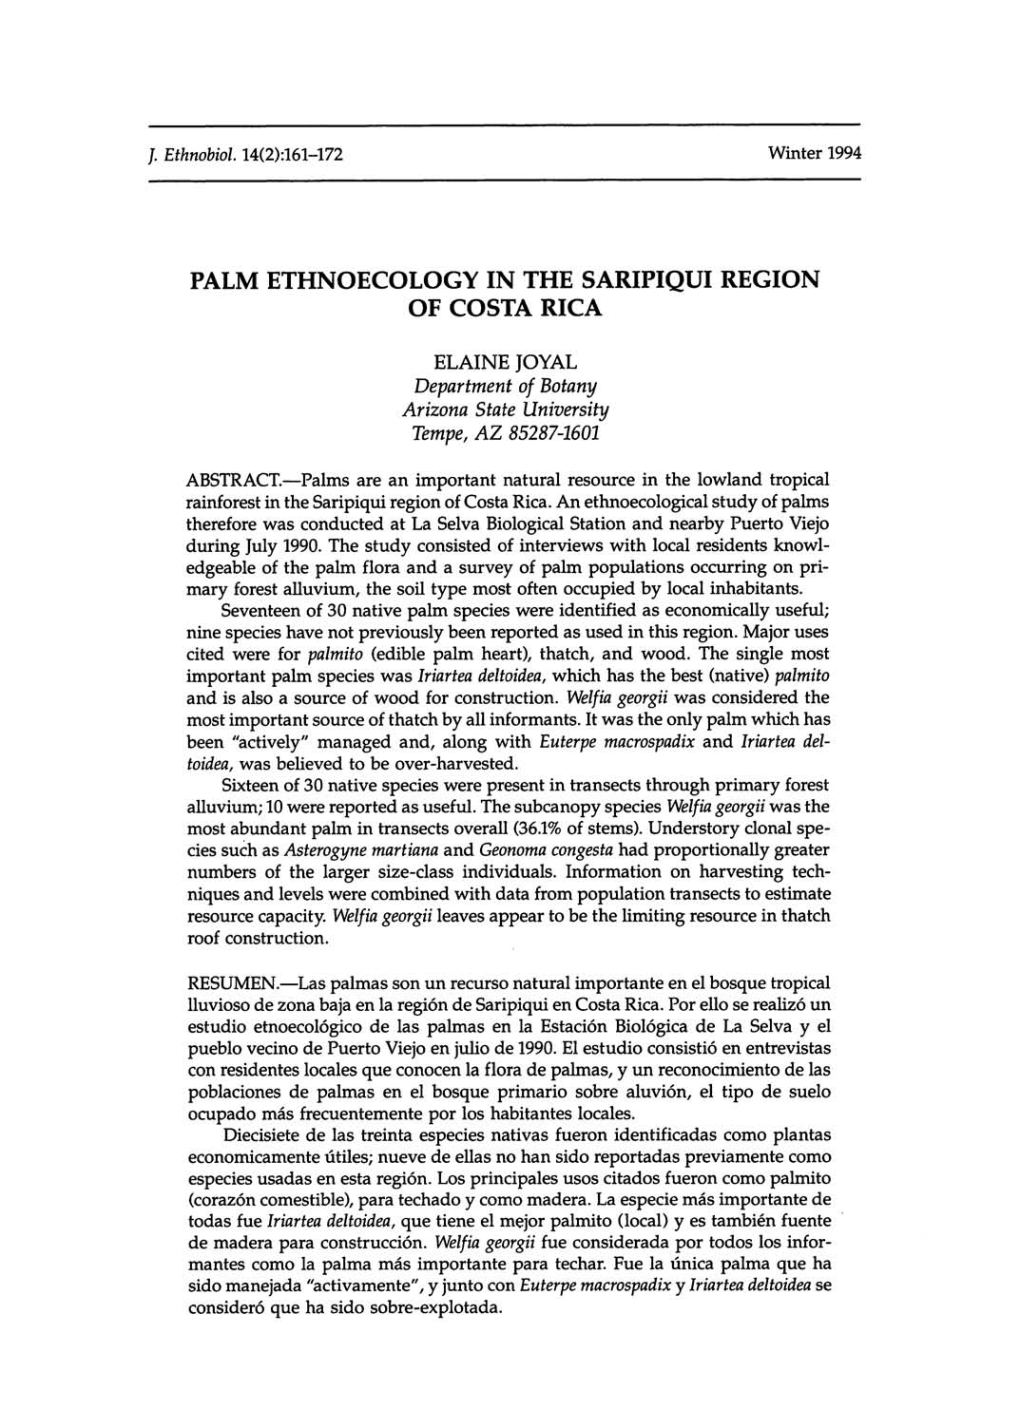 Palm Ethnoecology in the Saripiqui Region of Costa Rica